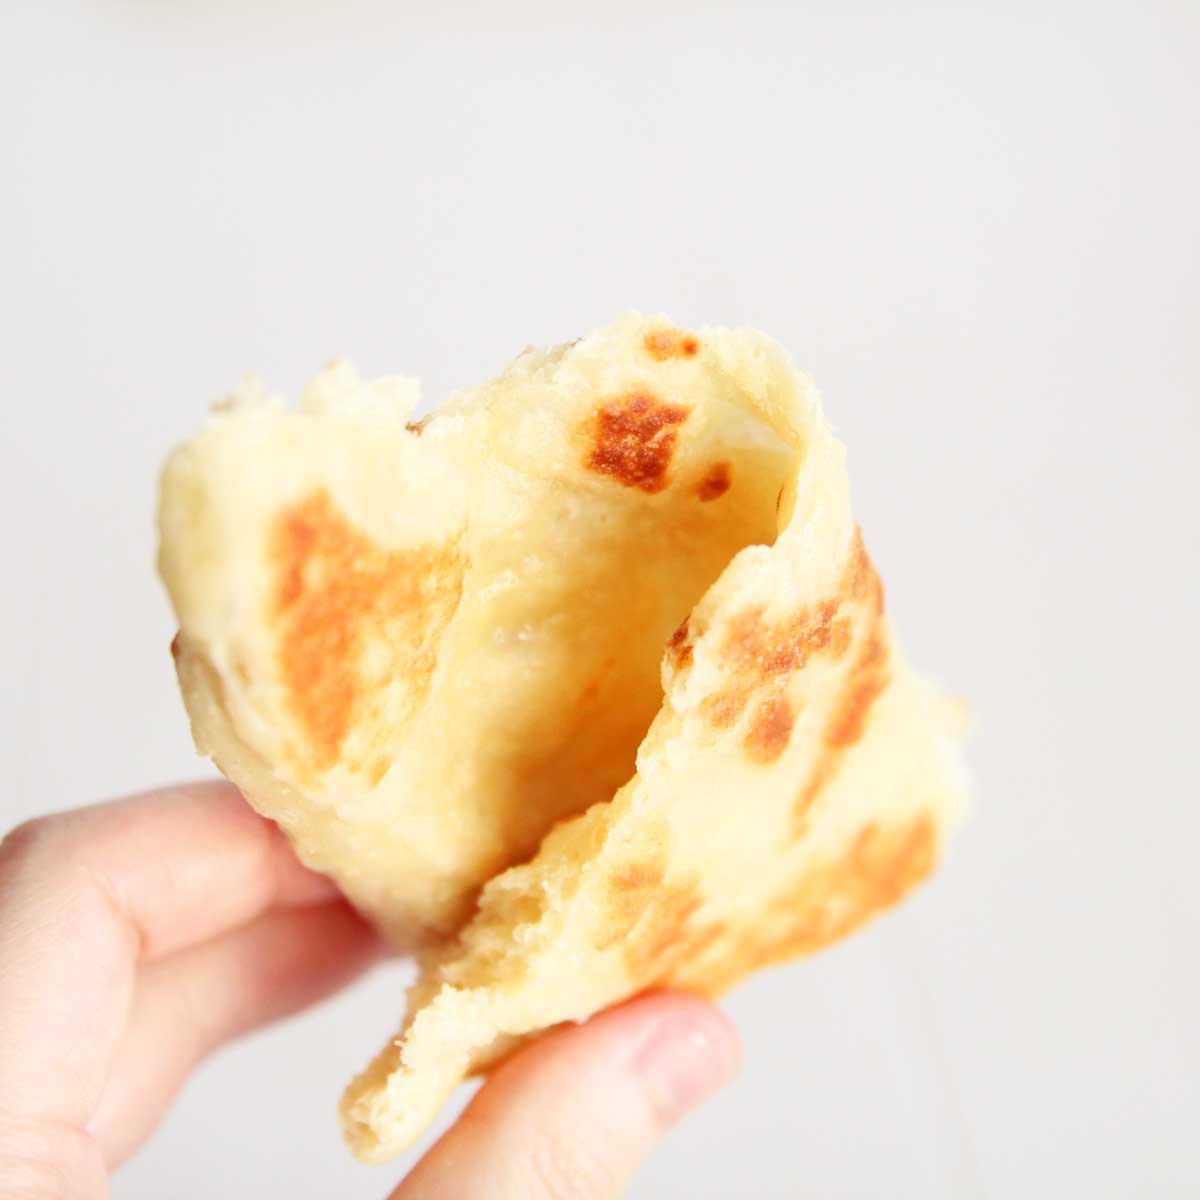 Soft & Chewy Homemade Ricotta Flatbread Recipe - Sticky Rice Potato Dumplings